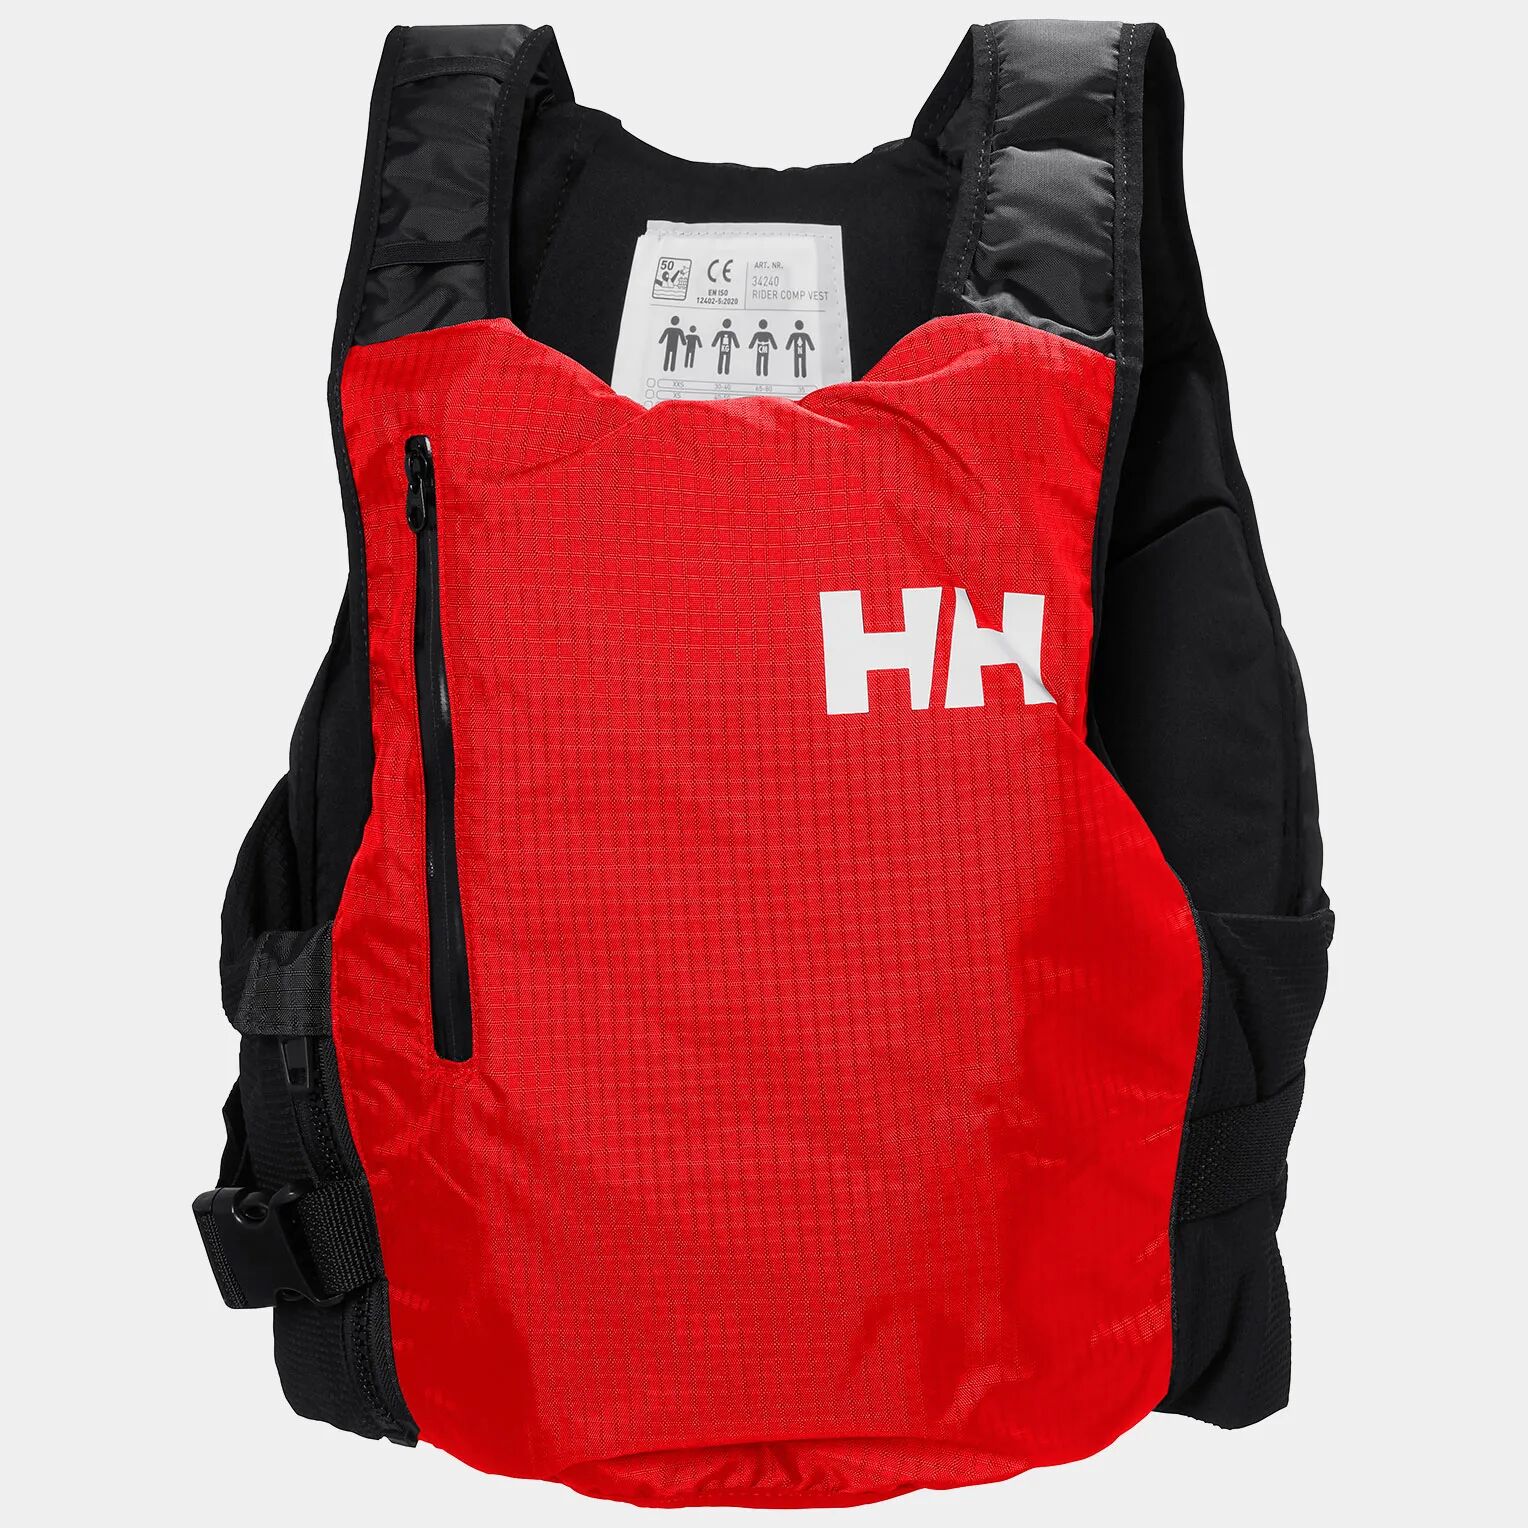 Helly Hansen Rider Foil Race Life Jacket Red 90+KG - Alert Red - Unisex